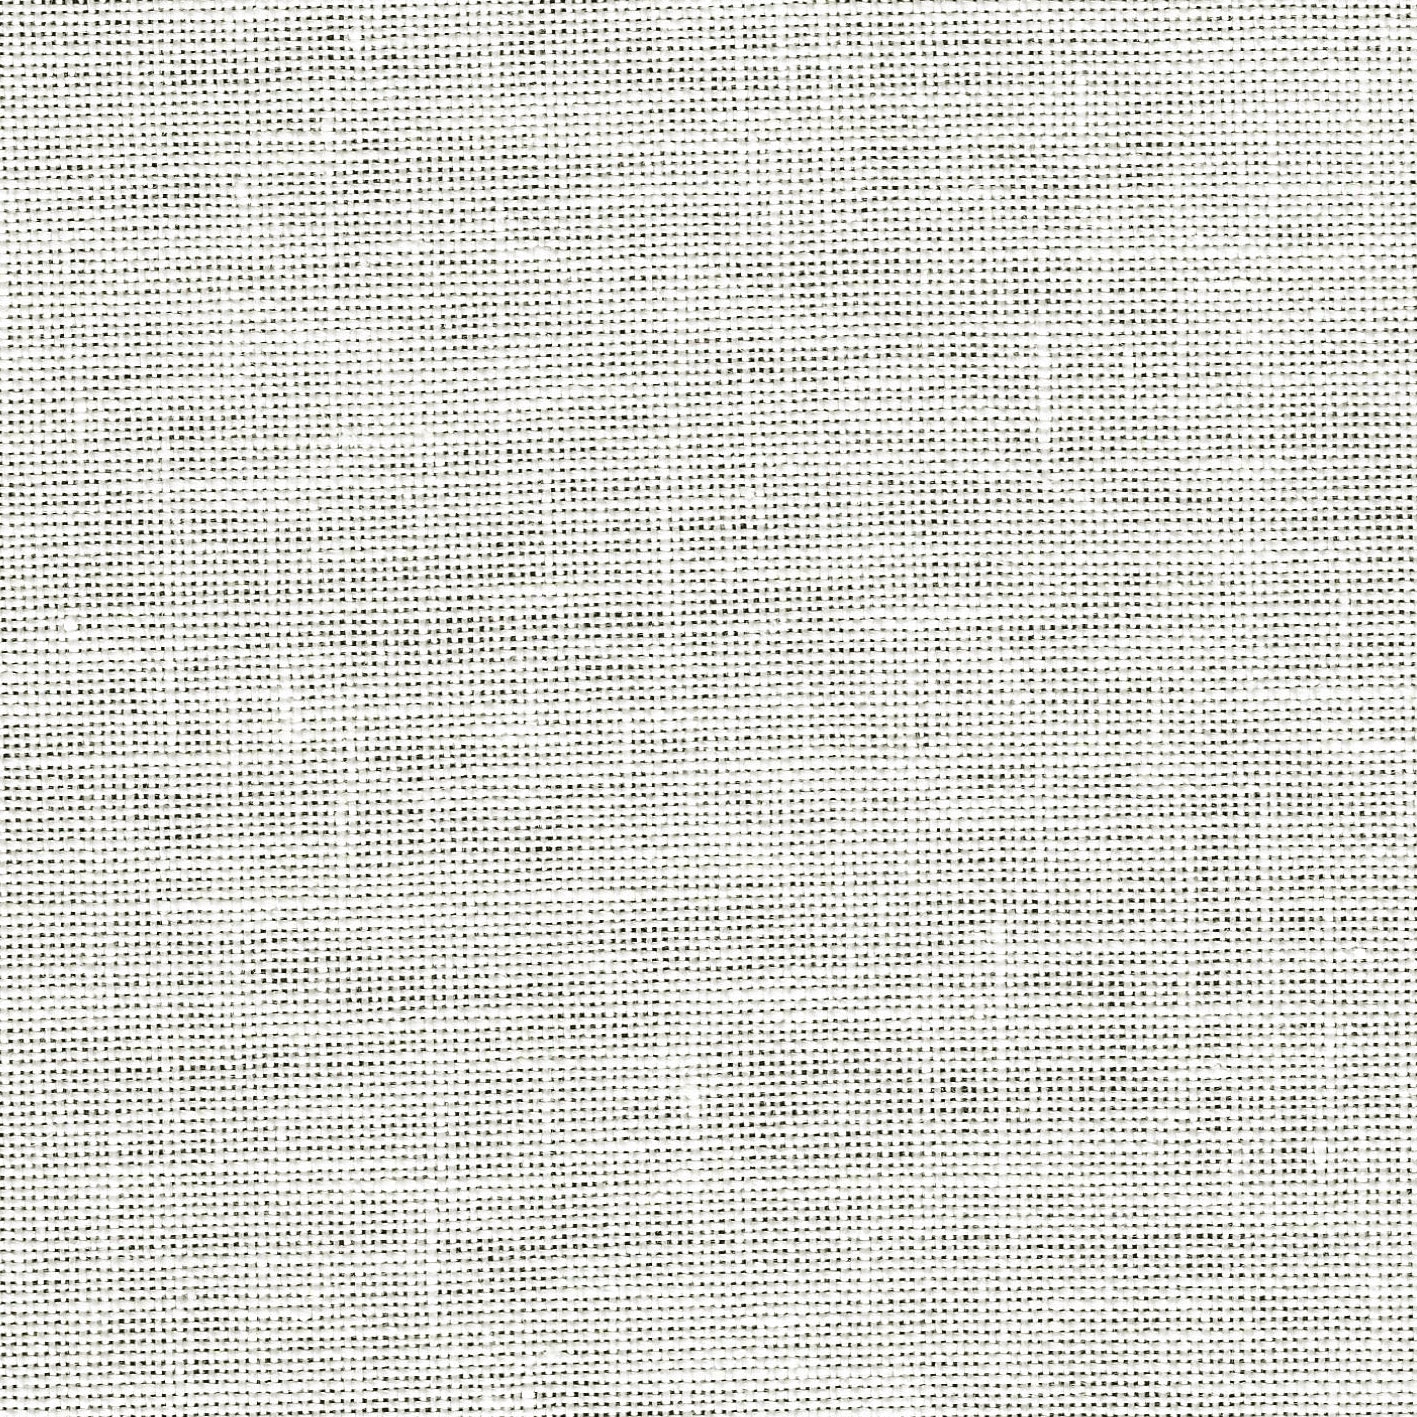 Zweigart Cashel 28Ct Antique White Linen (sold in 25cm increments)